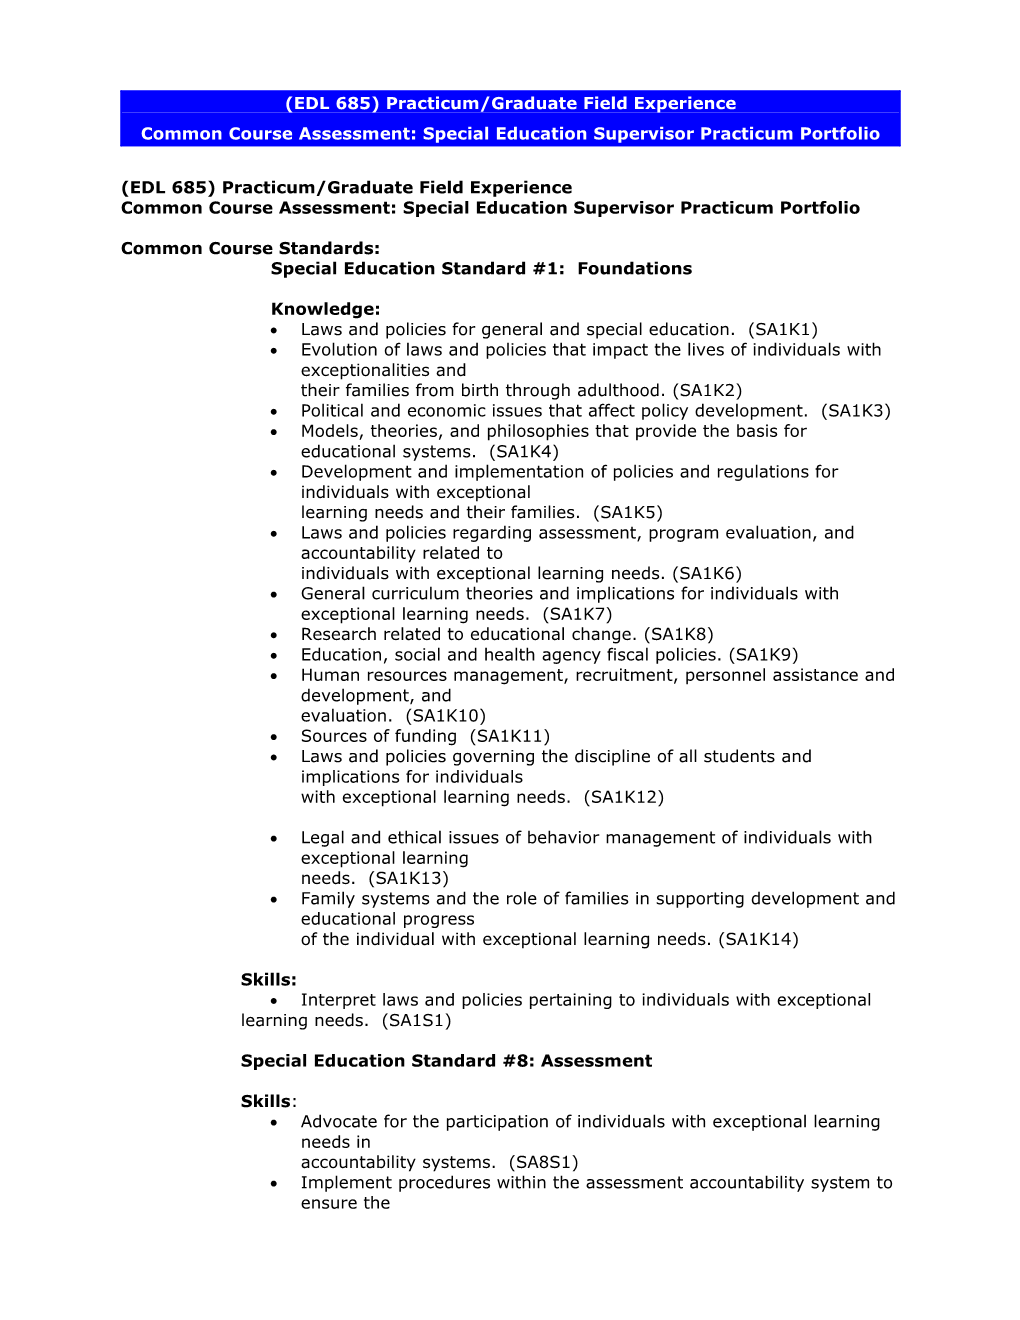 EDS 685 a Common Course Assessment: Special Education Supervisor Practicum